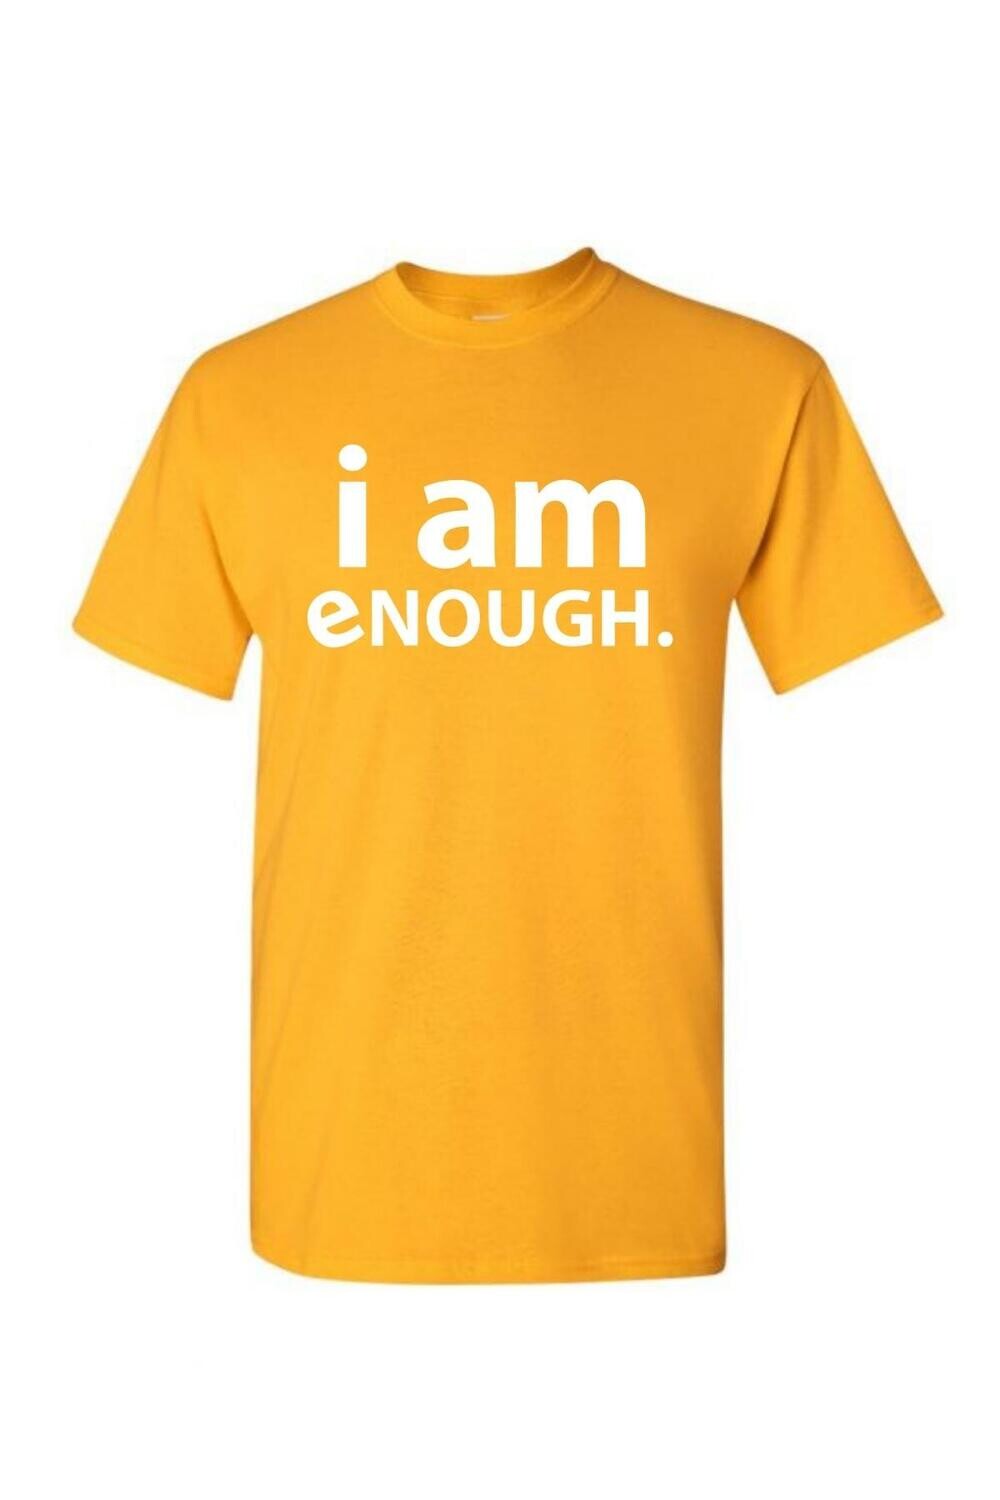 I AM ENOUGH Gold T-shirt